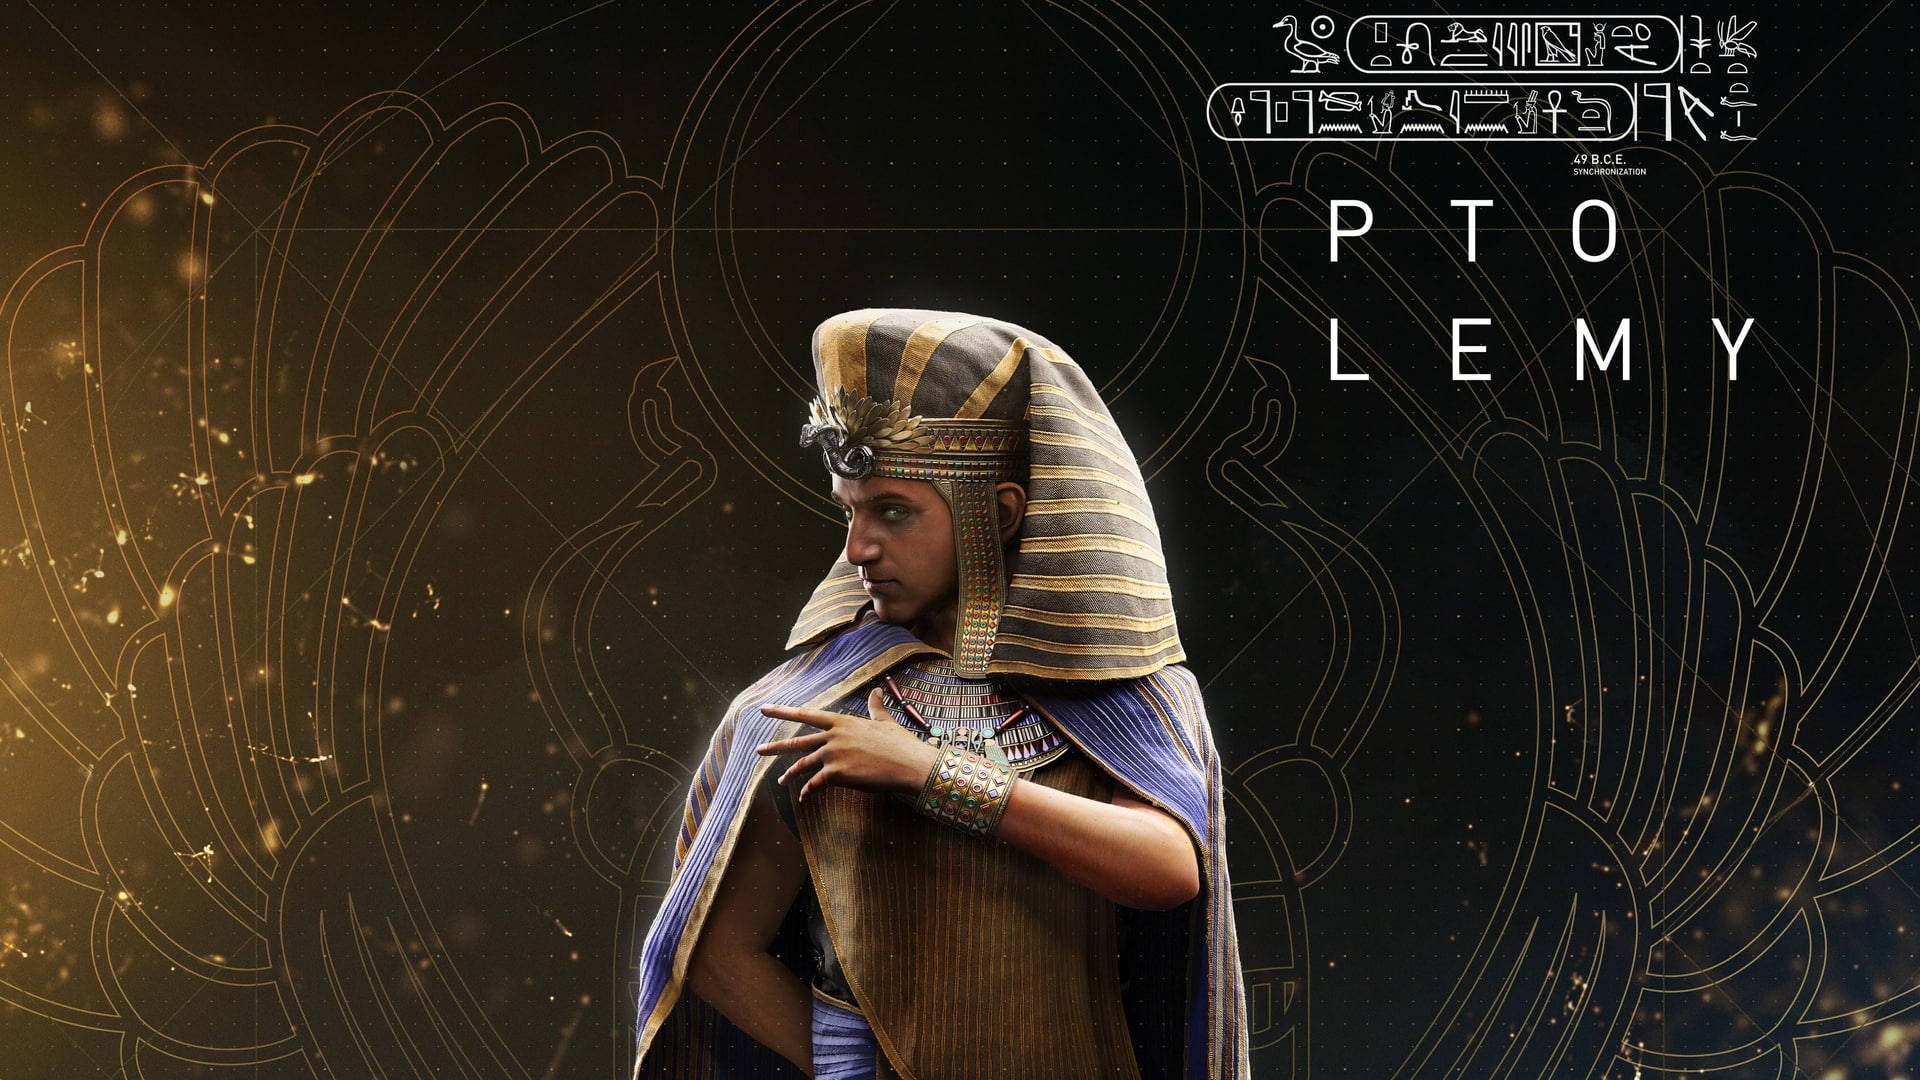 Power and Betrayal - Assassin Creed Origins Ptolemy Wallpaper